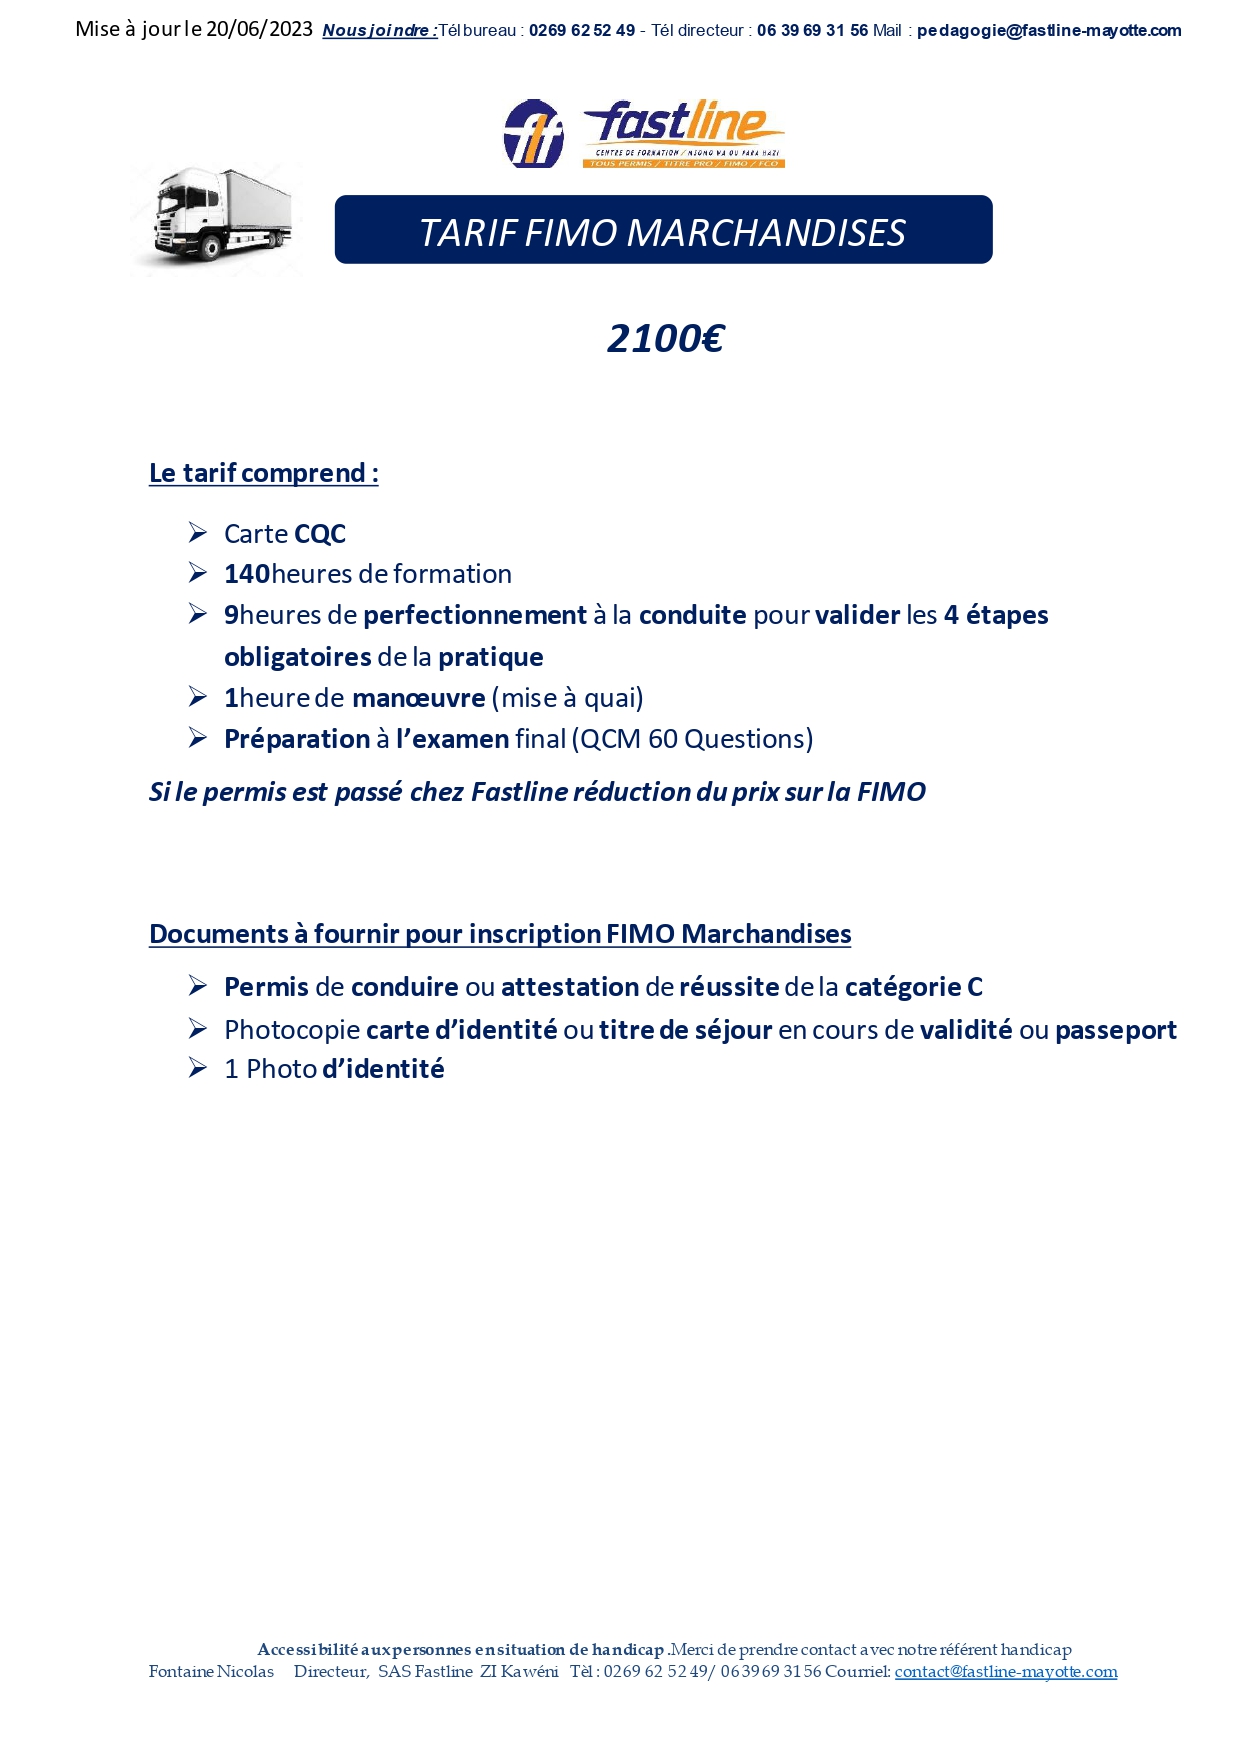 Catalogue Fastline.definitif.docx 2023(1)_page-0011